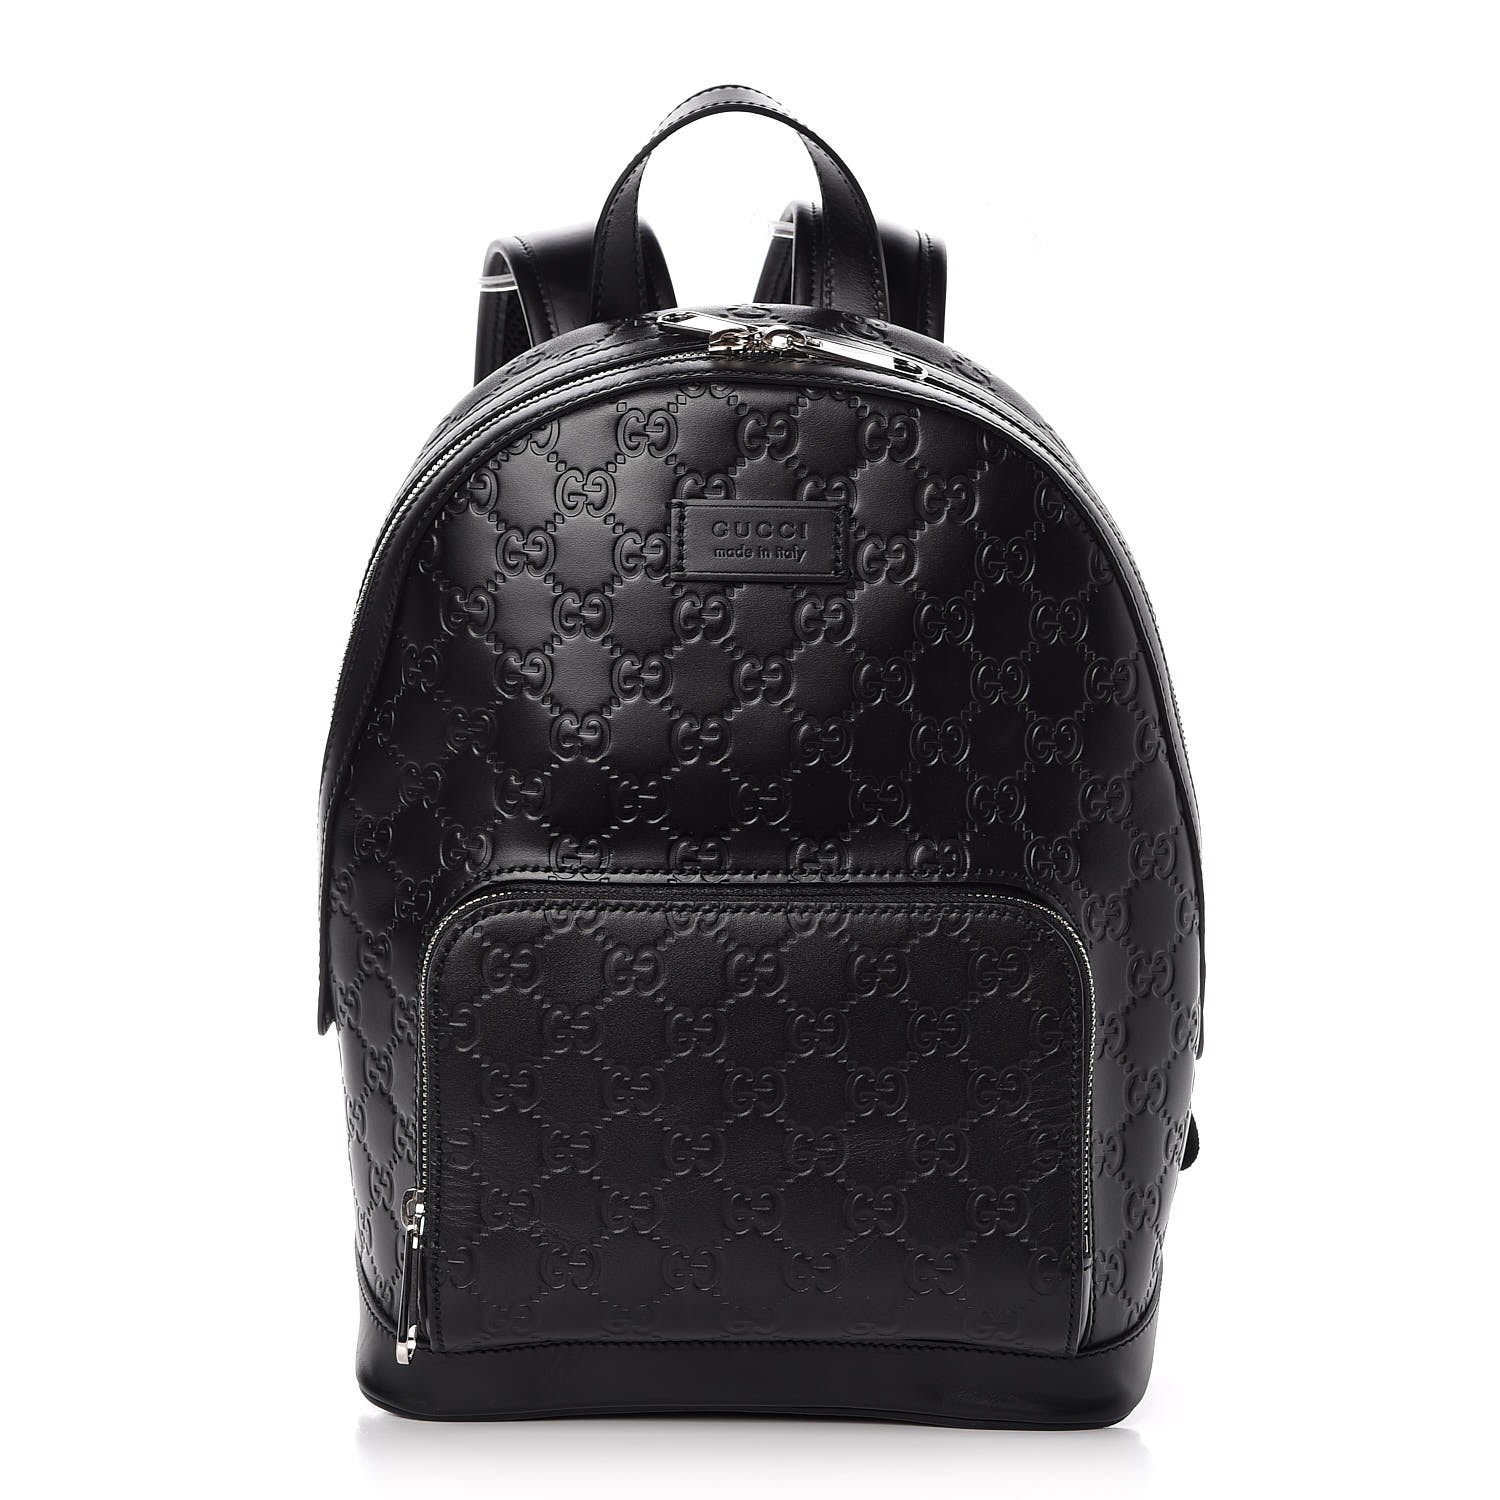 Gucci Guccissima Signature Backpack | The Art of Mike Mignola